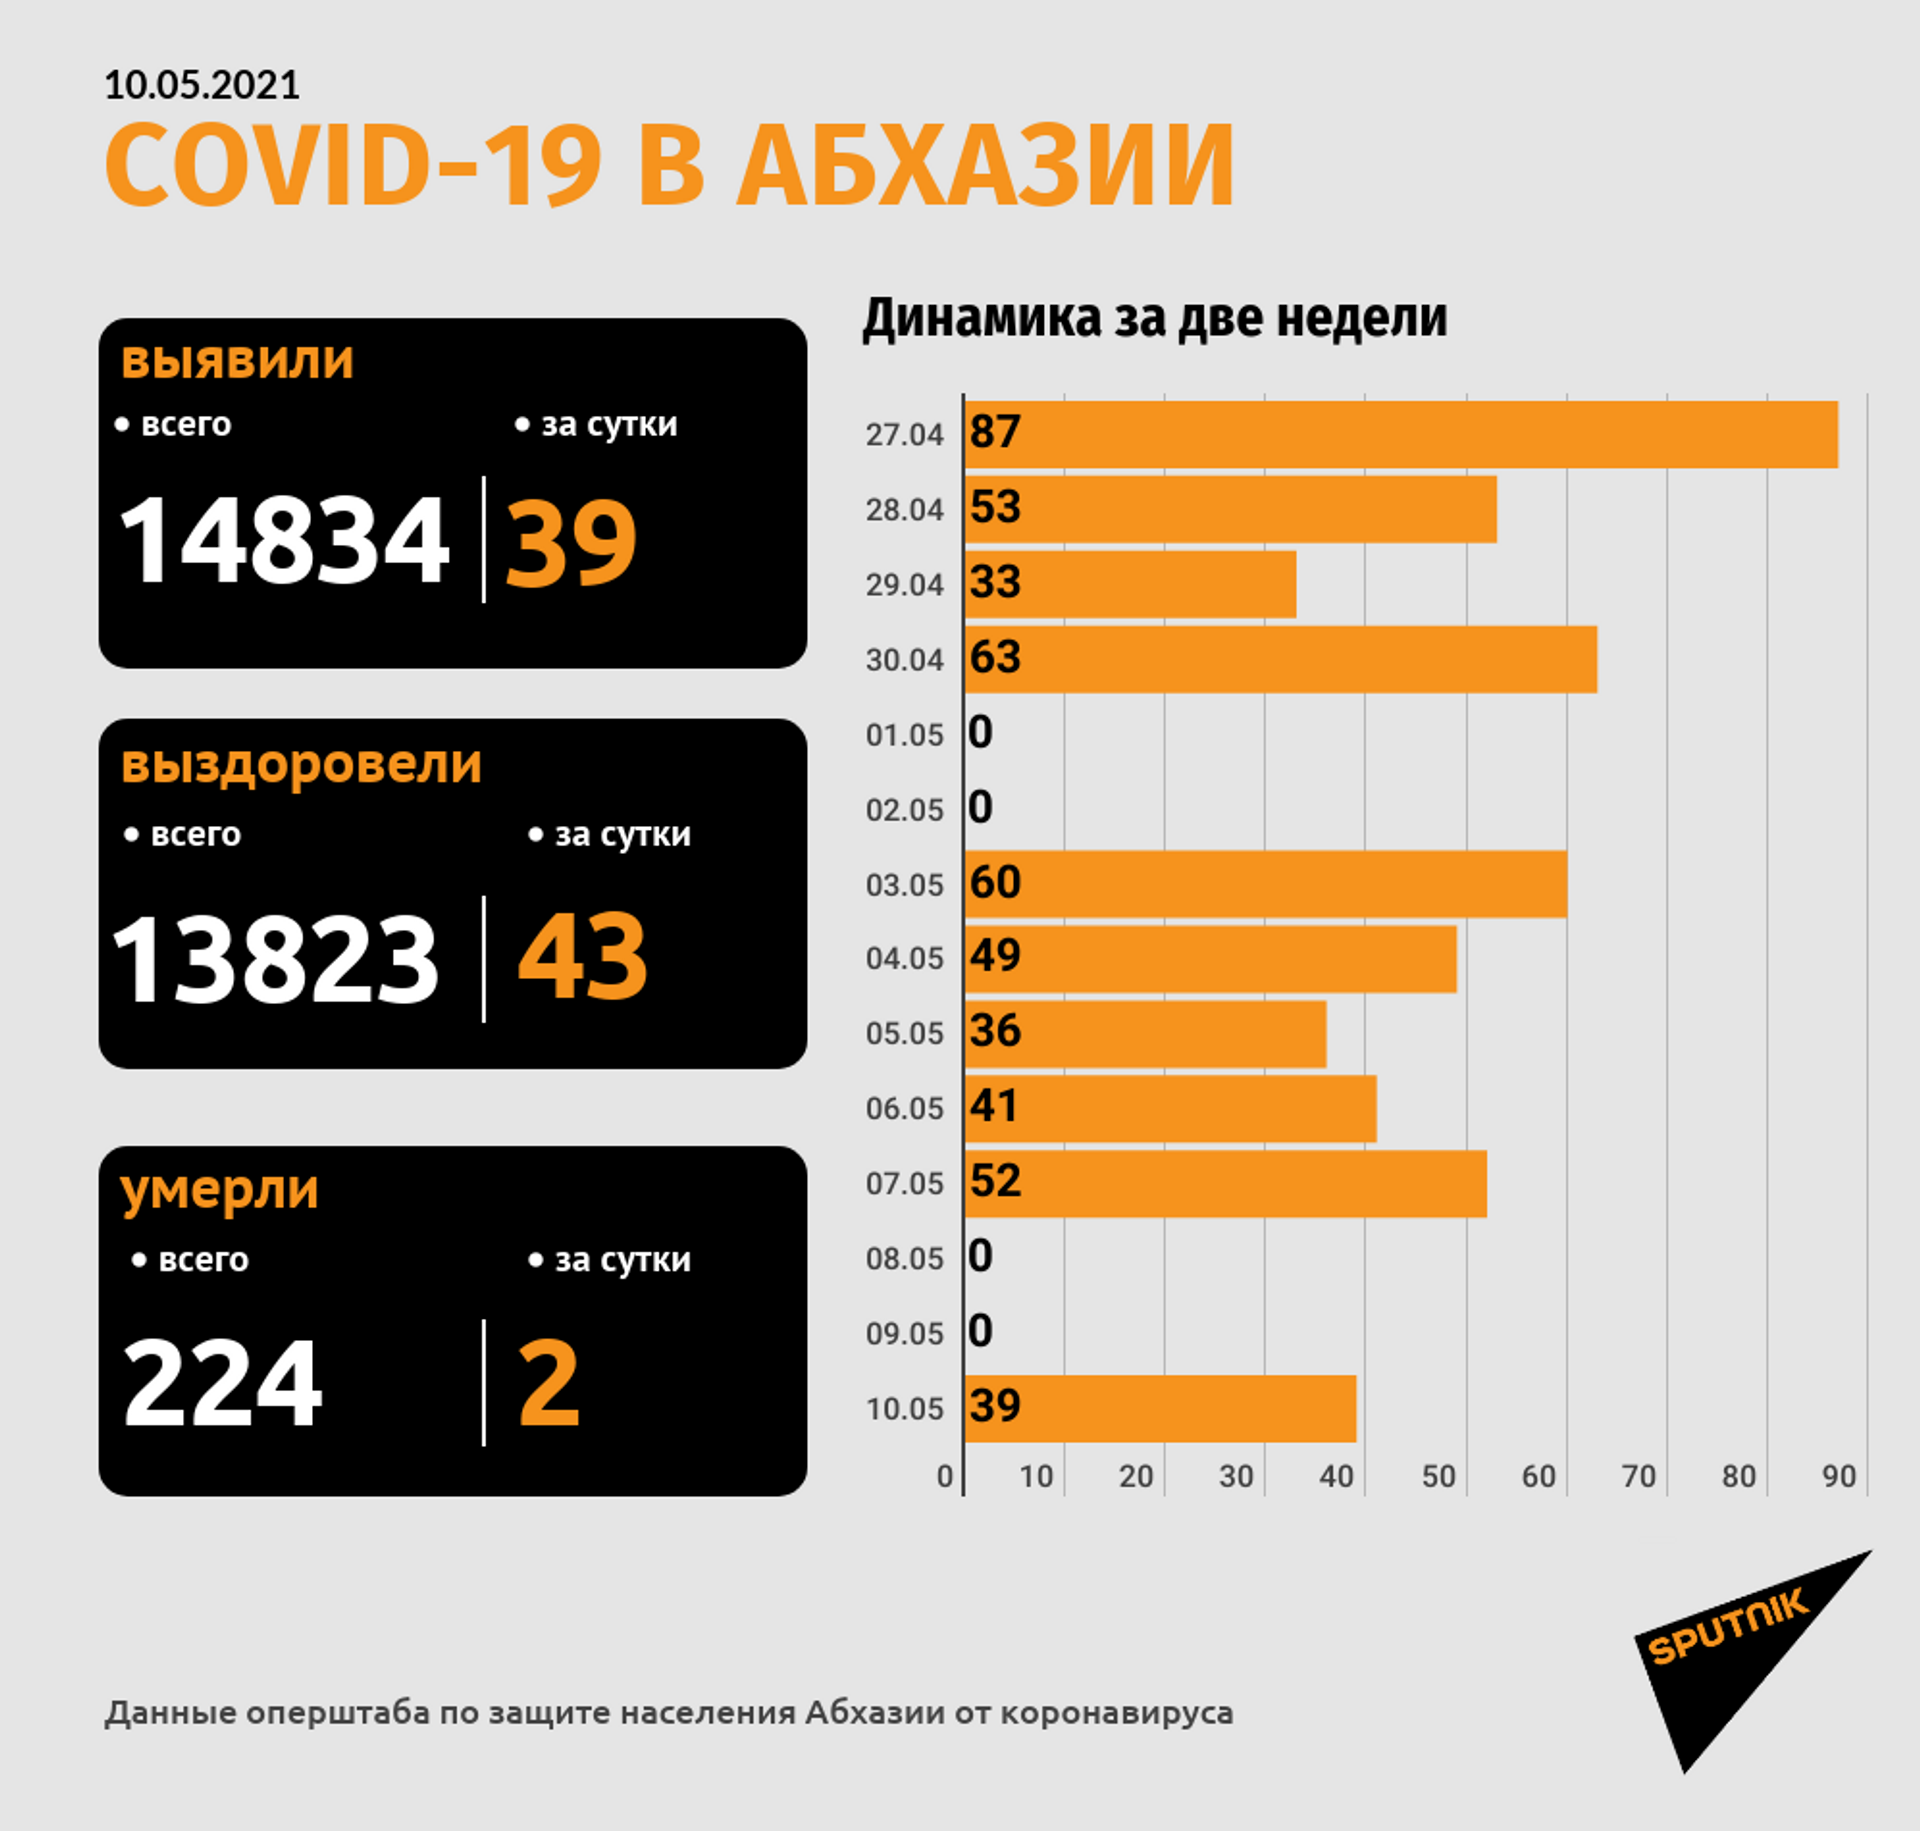 Две пациентки с COVID-19 скончались в Абхазии  - Sputnik Абхазия, 1920, 10.05.2021